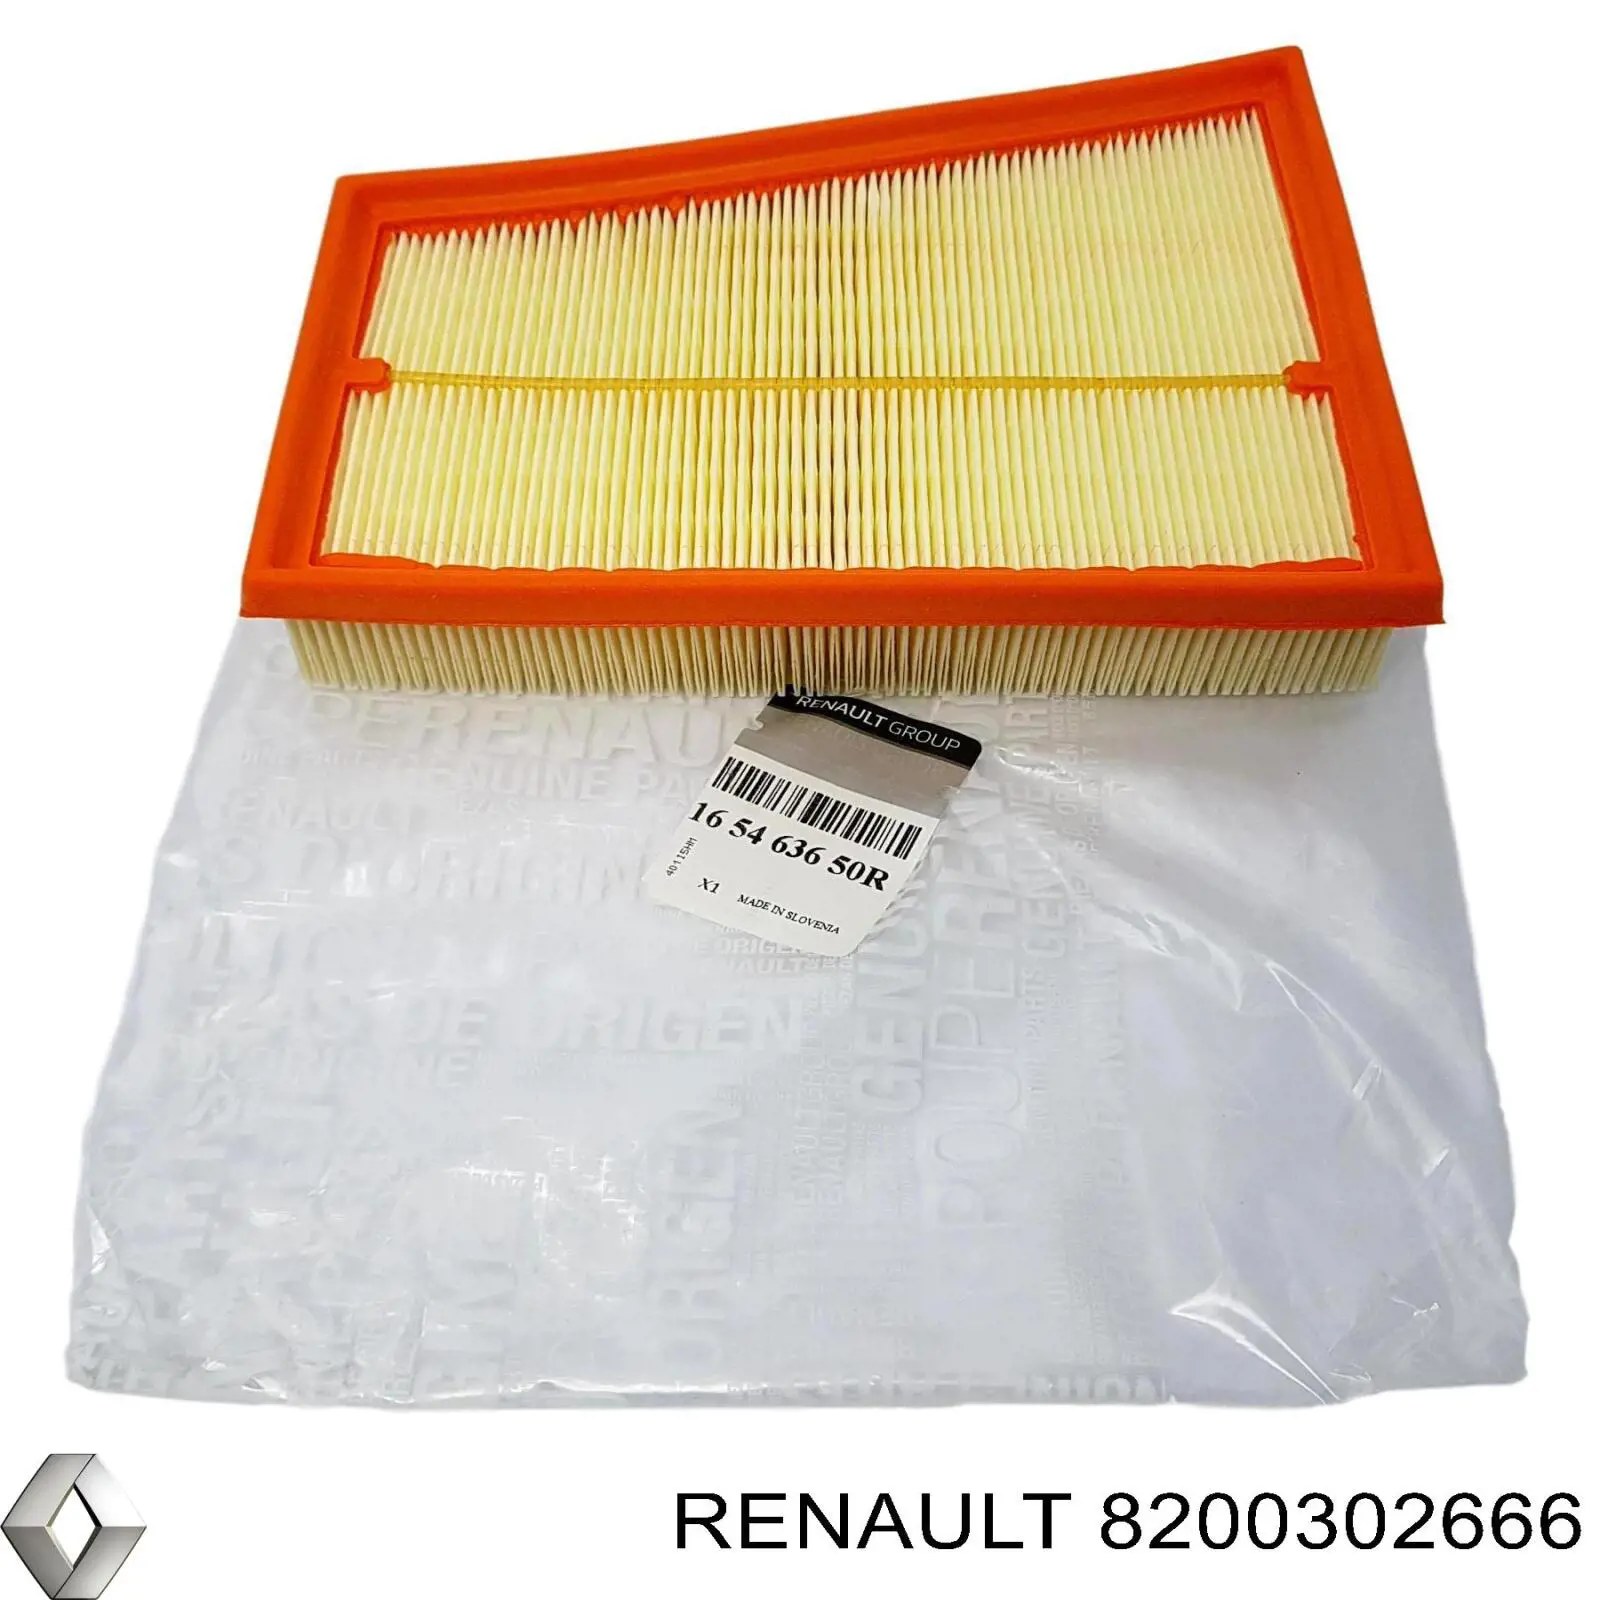 8200302666 Renault (RVI) filtro de aire